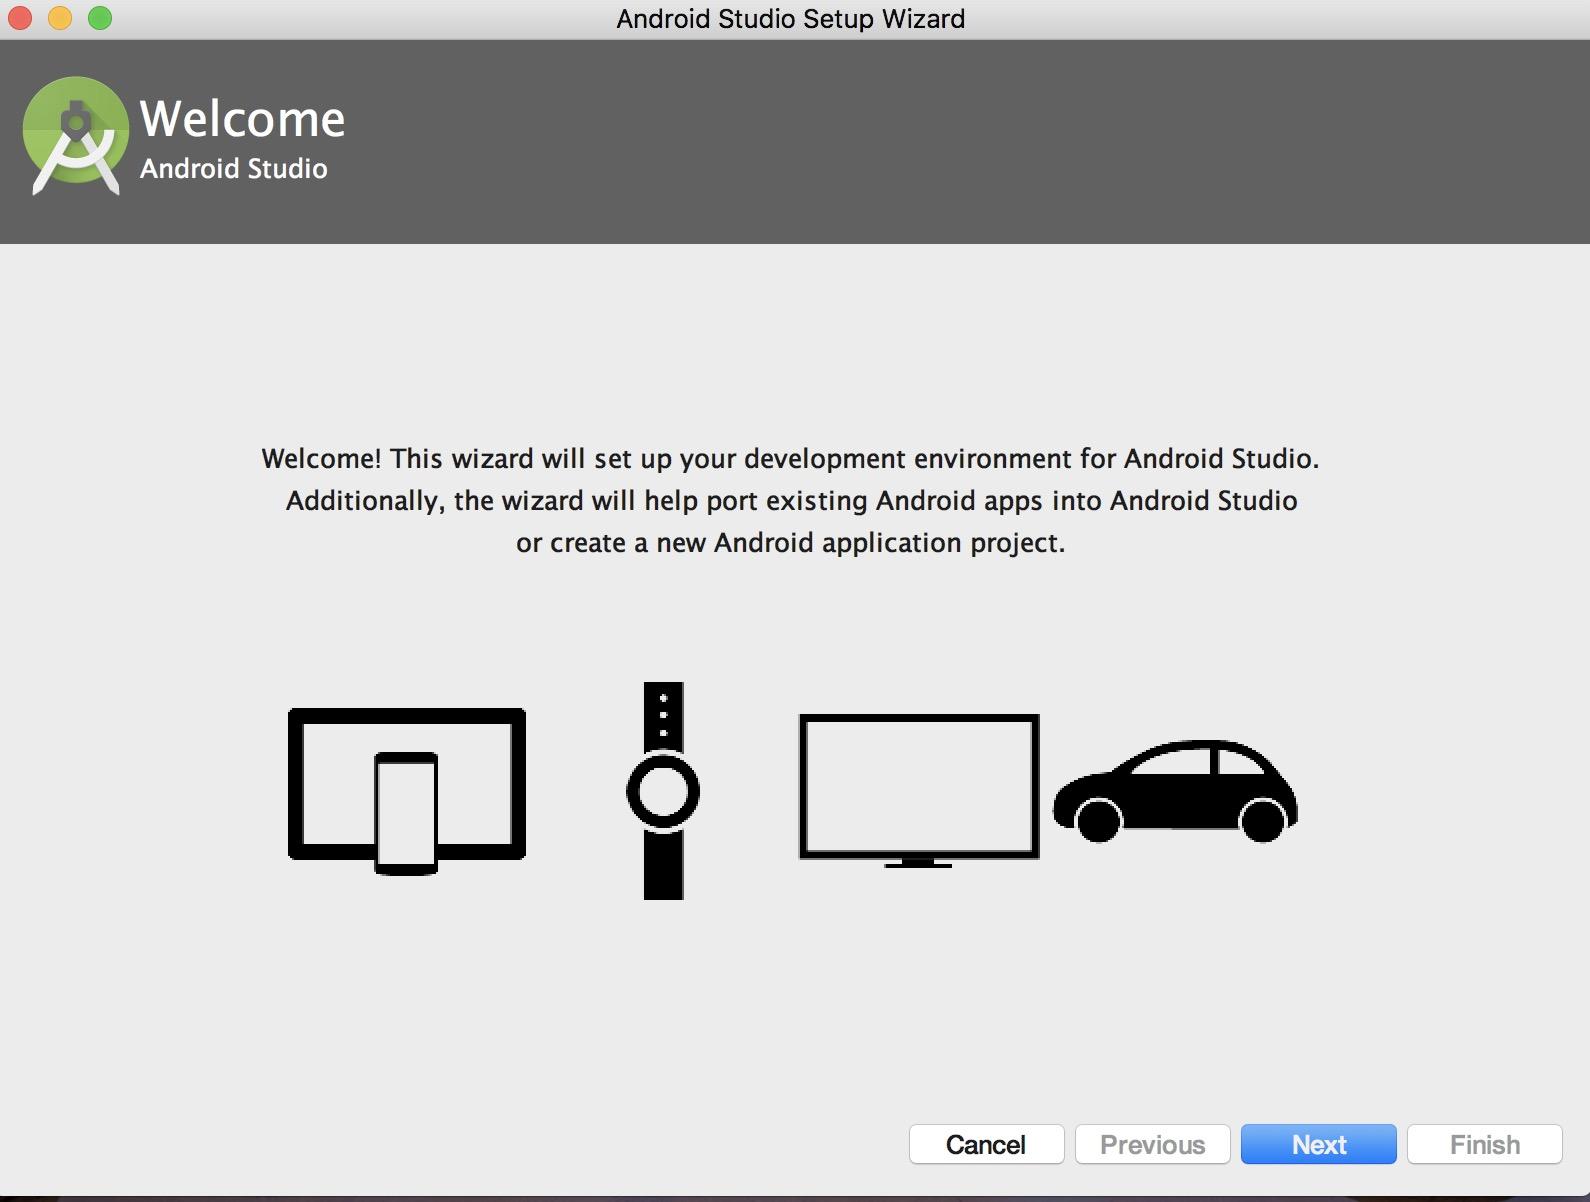 mac系统中AndroidStudio怎么用